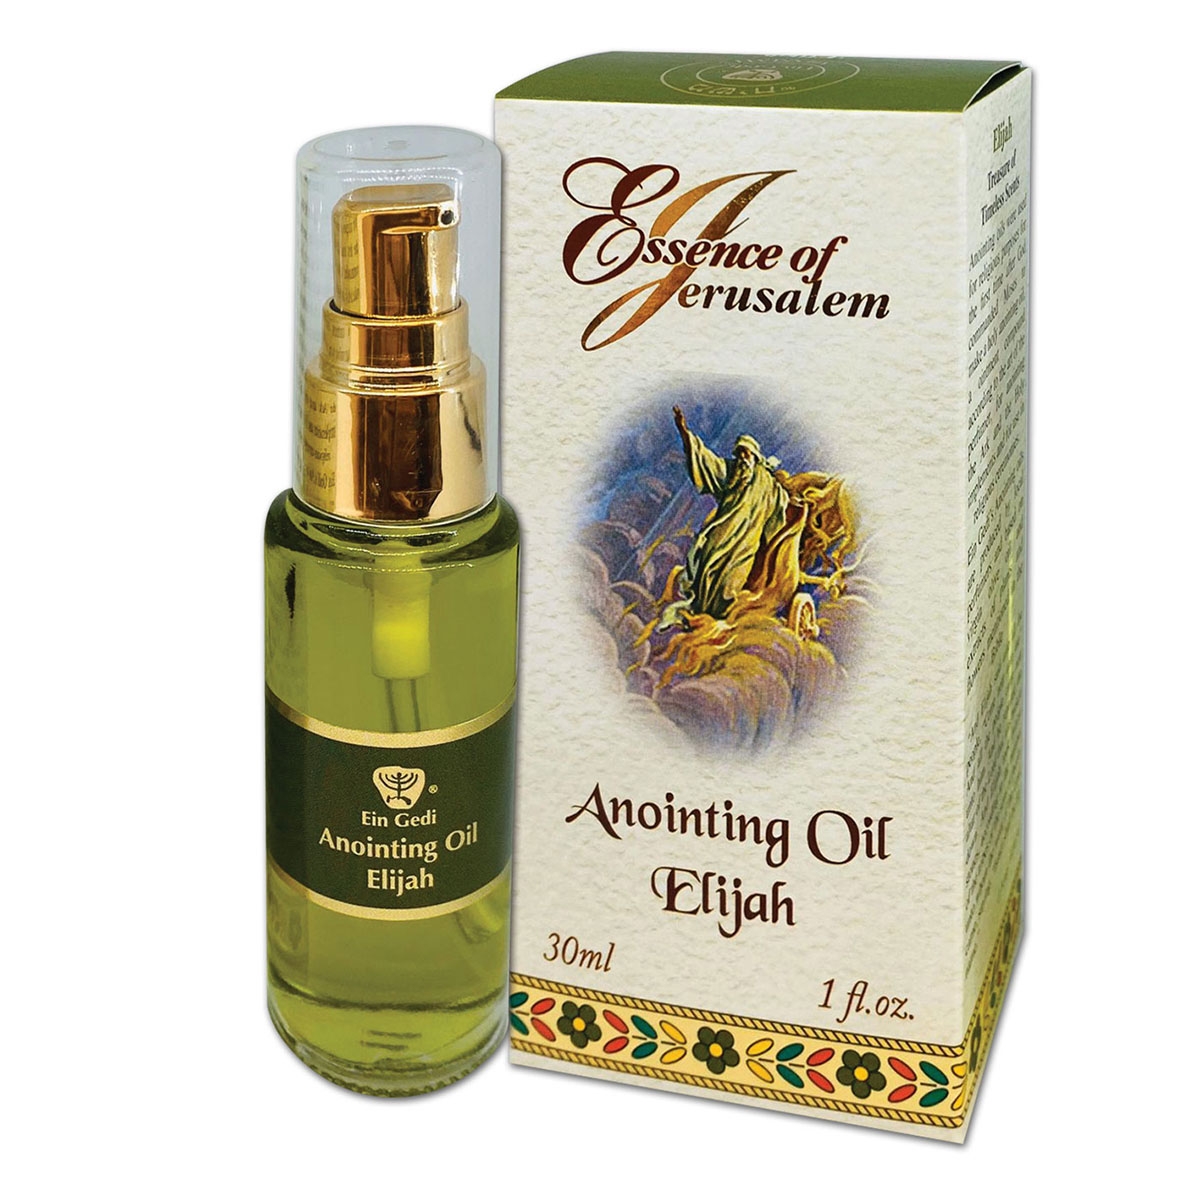 Ein Gedi Essence of Jerusalem Anointing Oil – Elijah (30 ml) - 1